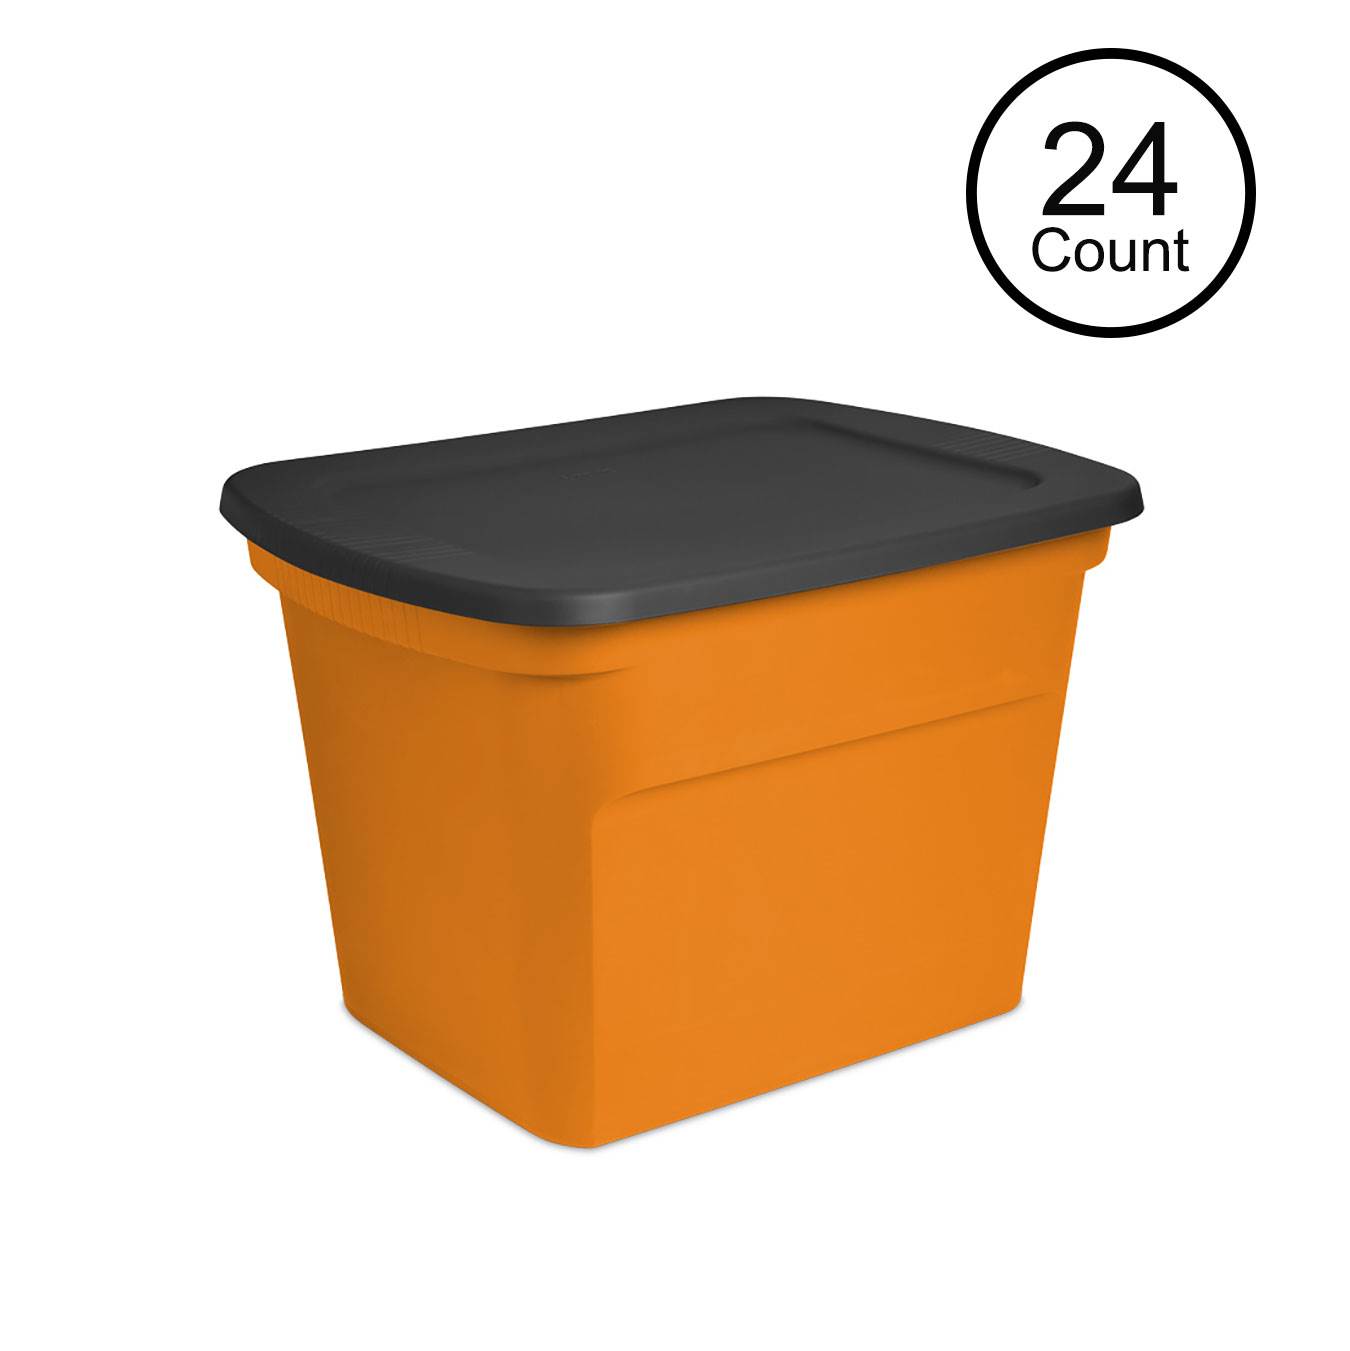 Sterilite Orange 64 Quart Latching Plastic Storage Box Container Tote,6  Pack Orange Lidded Storage Bins Baskets, Bins & Containers  originsofwhiskey.com